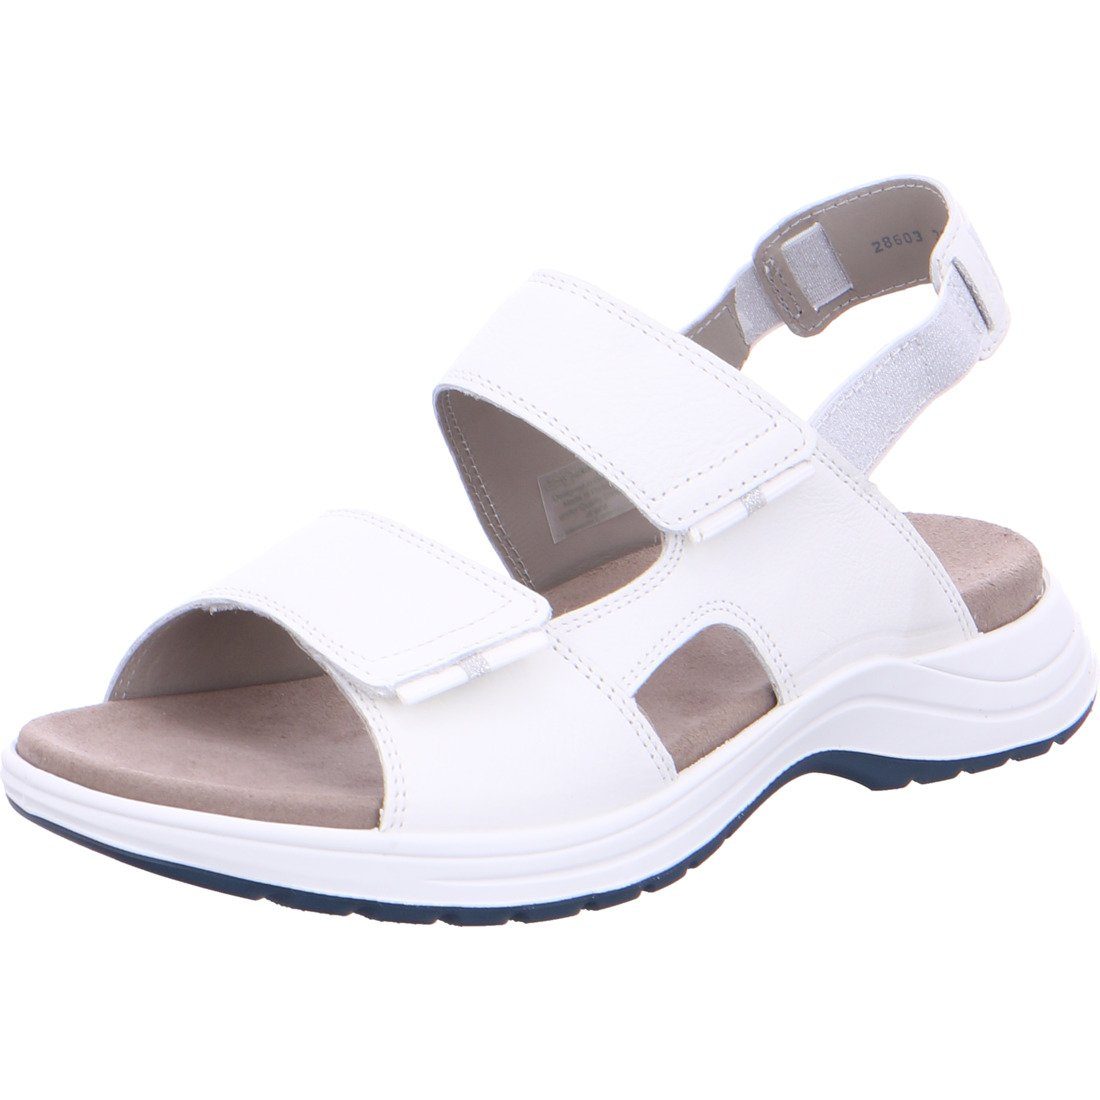 Ara Ara Schuhe, Glattleder Panama Sandalette Sandalette - weiß 042411